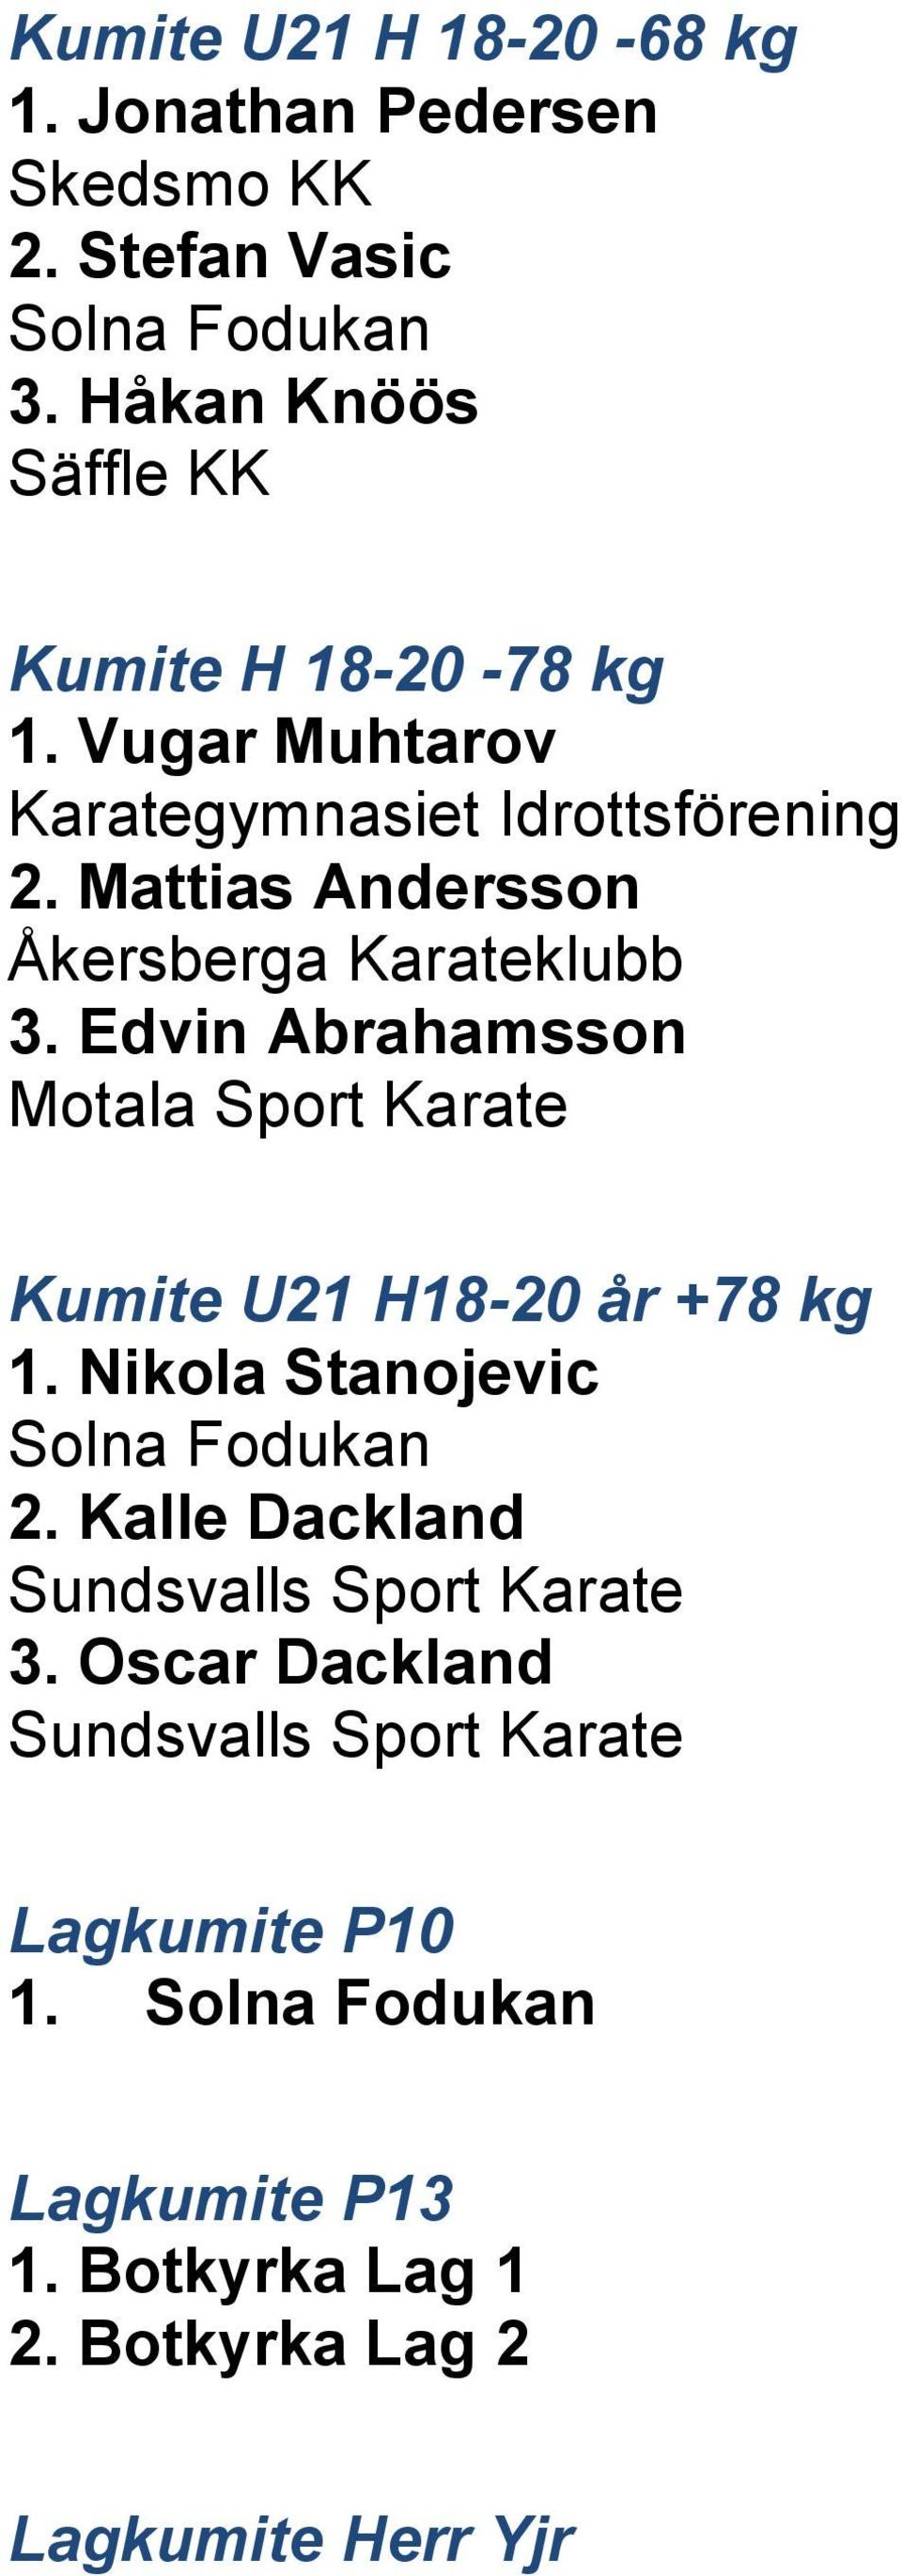 Mattias Andersson Åkersberga Karateklubb 3. Edvin Abrahamsson Motala Sport Karate Kumite U21 H18-20 år +78 kg 1.